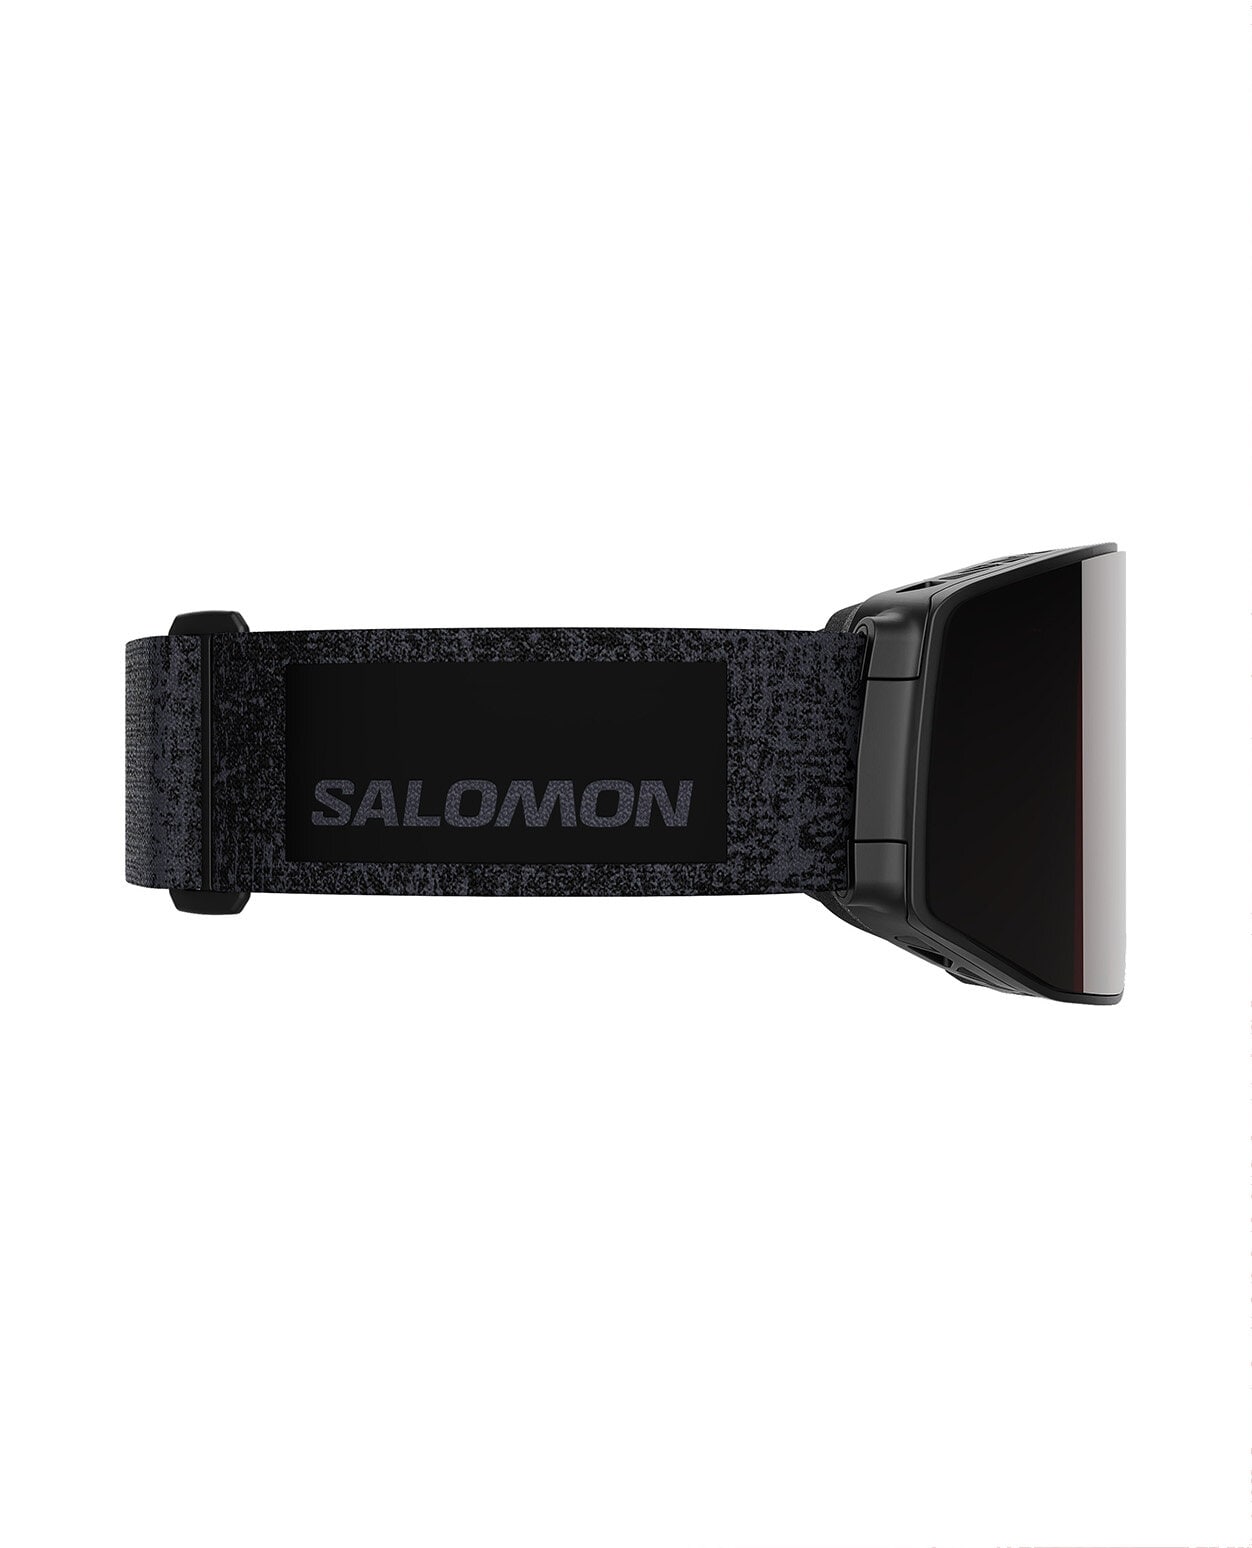 Salomon Sentry Prime Sigma Black / Sigma Gun Metal